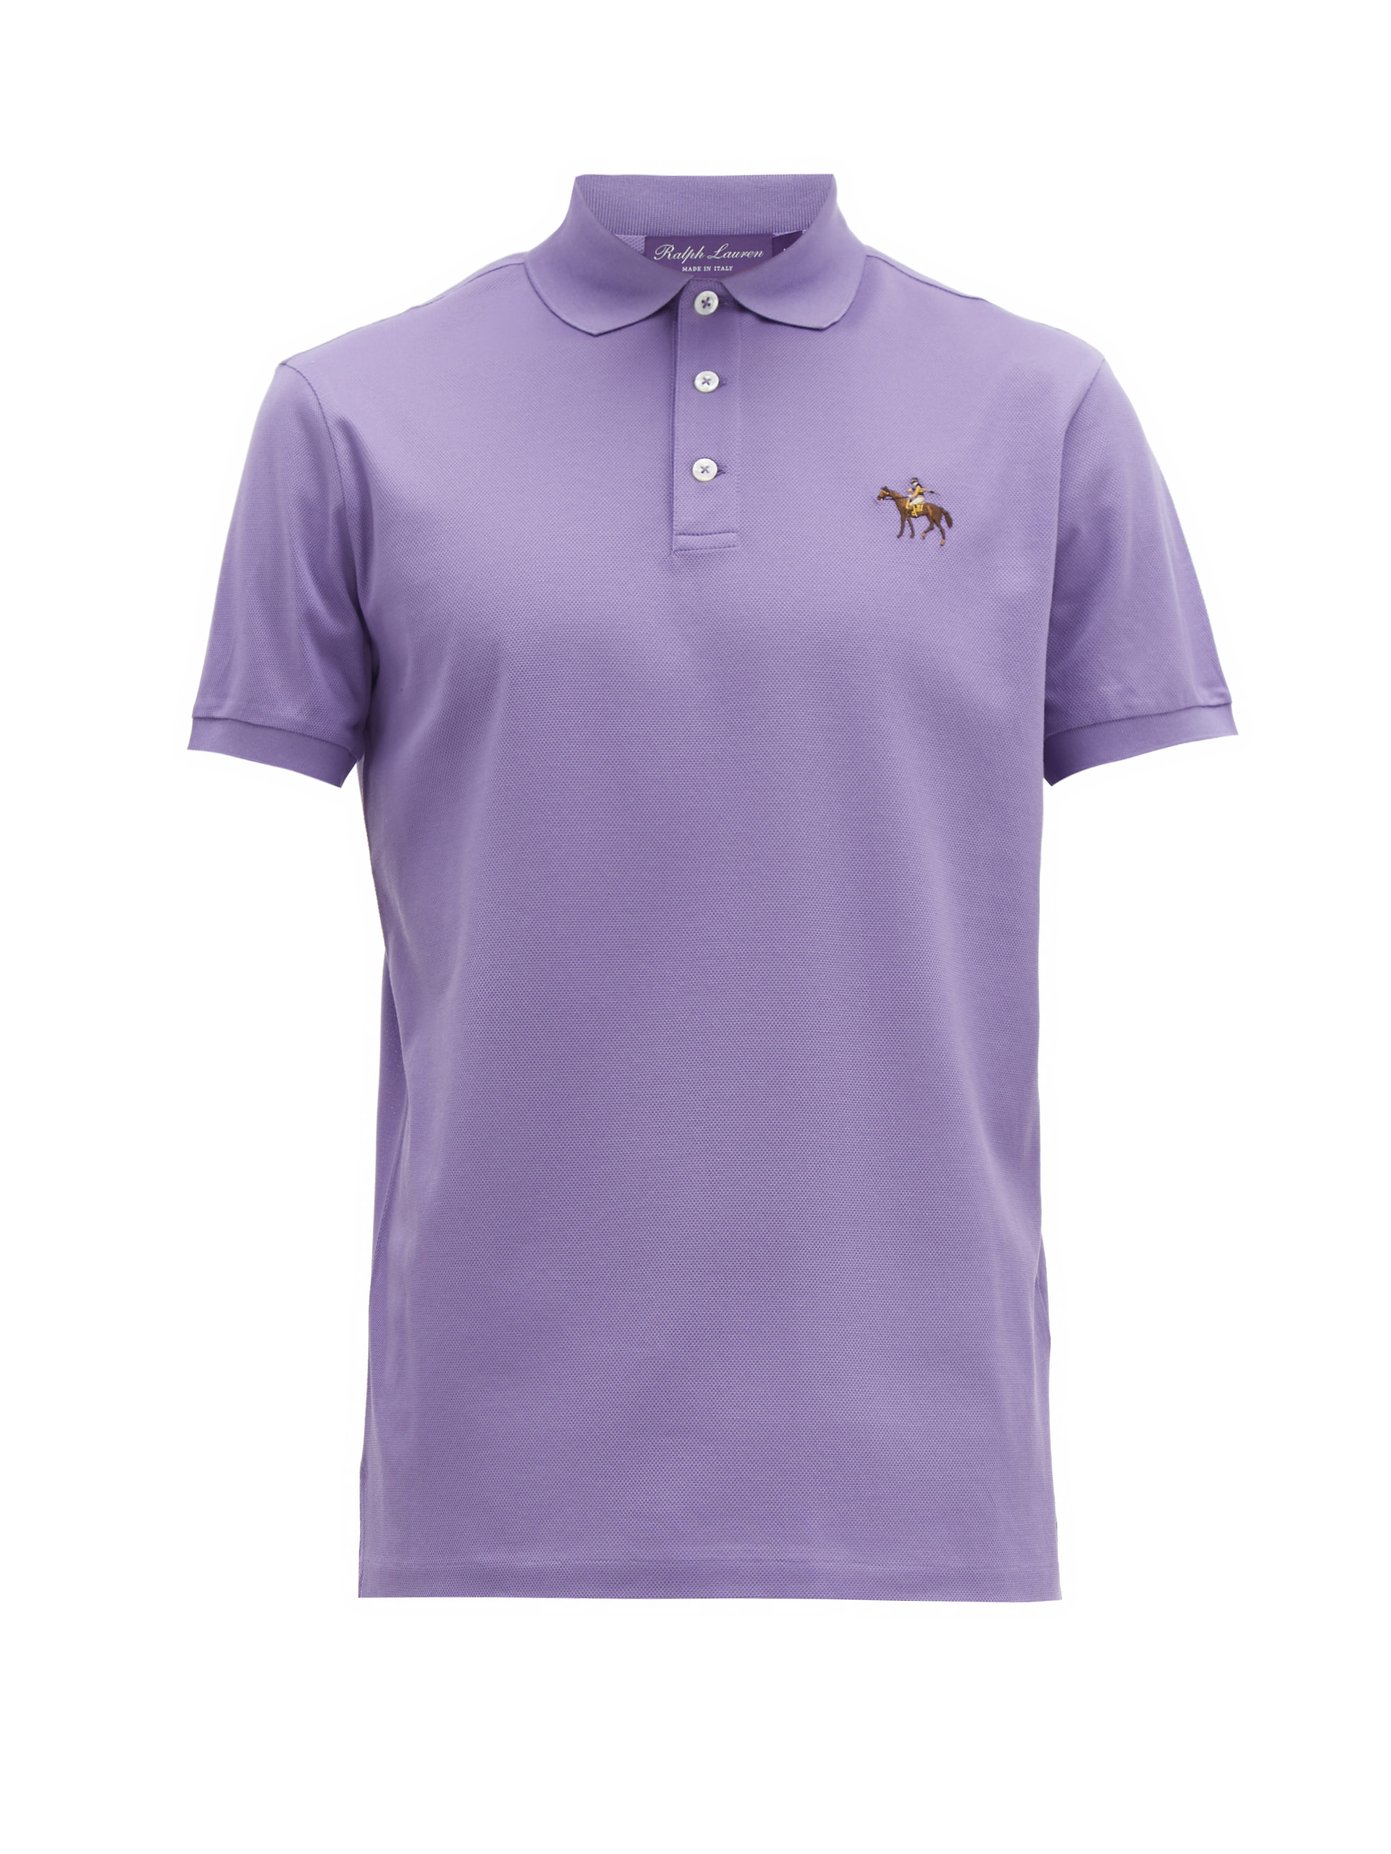 ralph lauren purple label t shirt